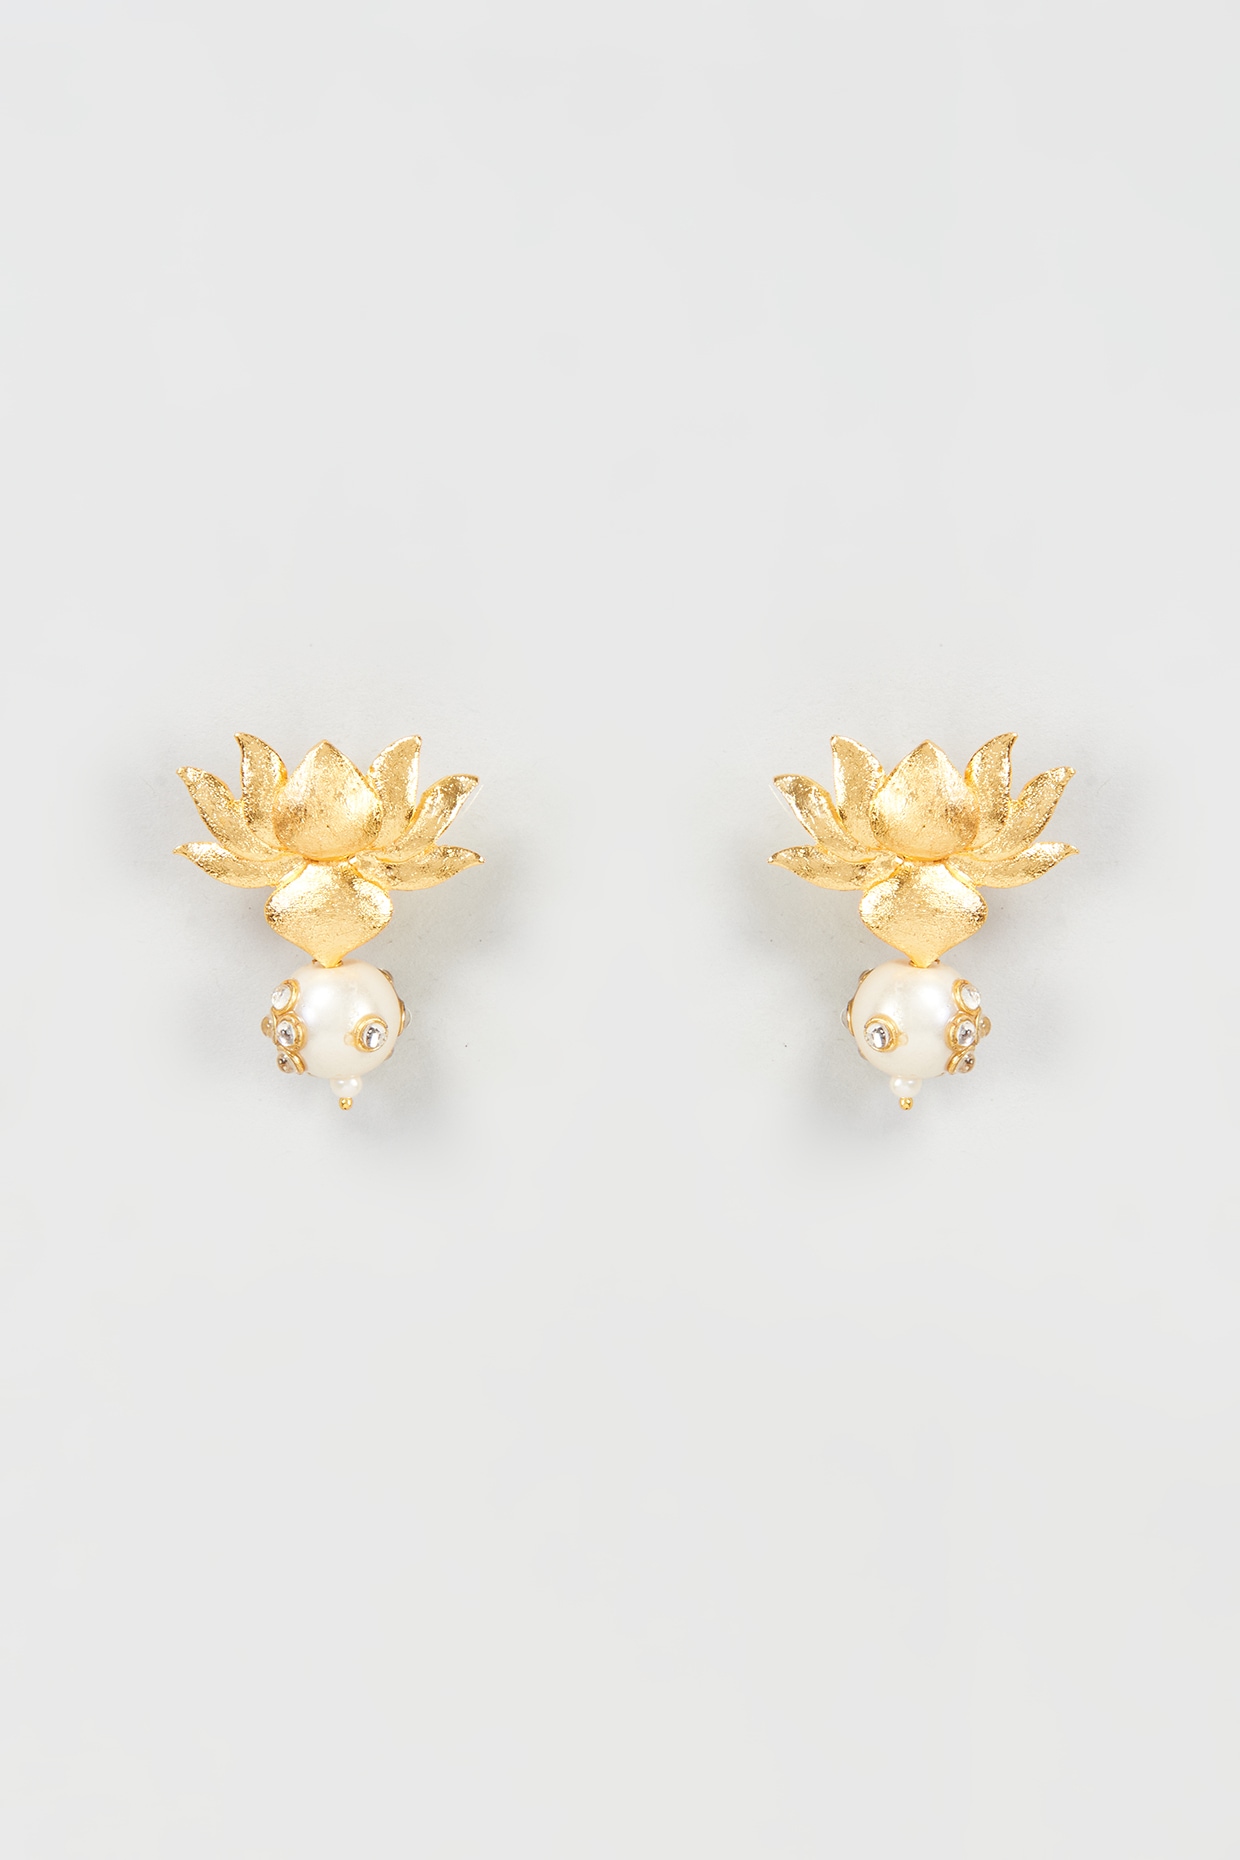 2 Gram Gold Earings Jimikki With Weight  Handmade Gold Earrings  YouTube